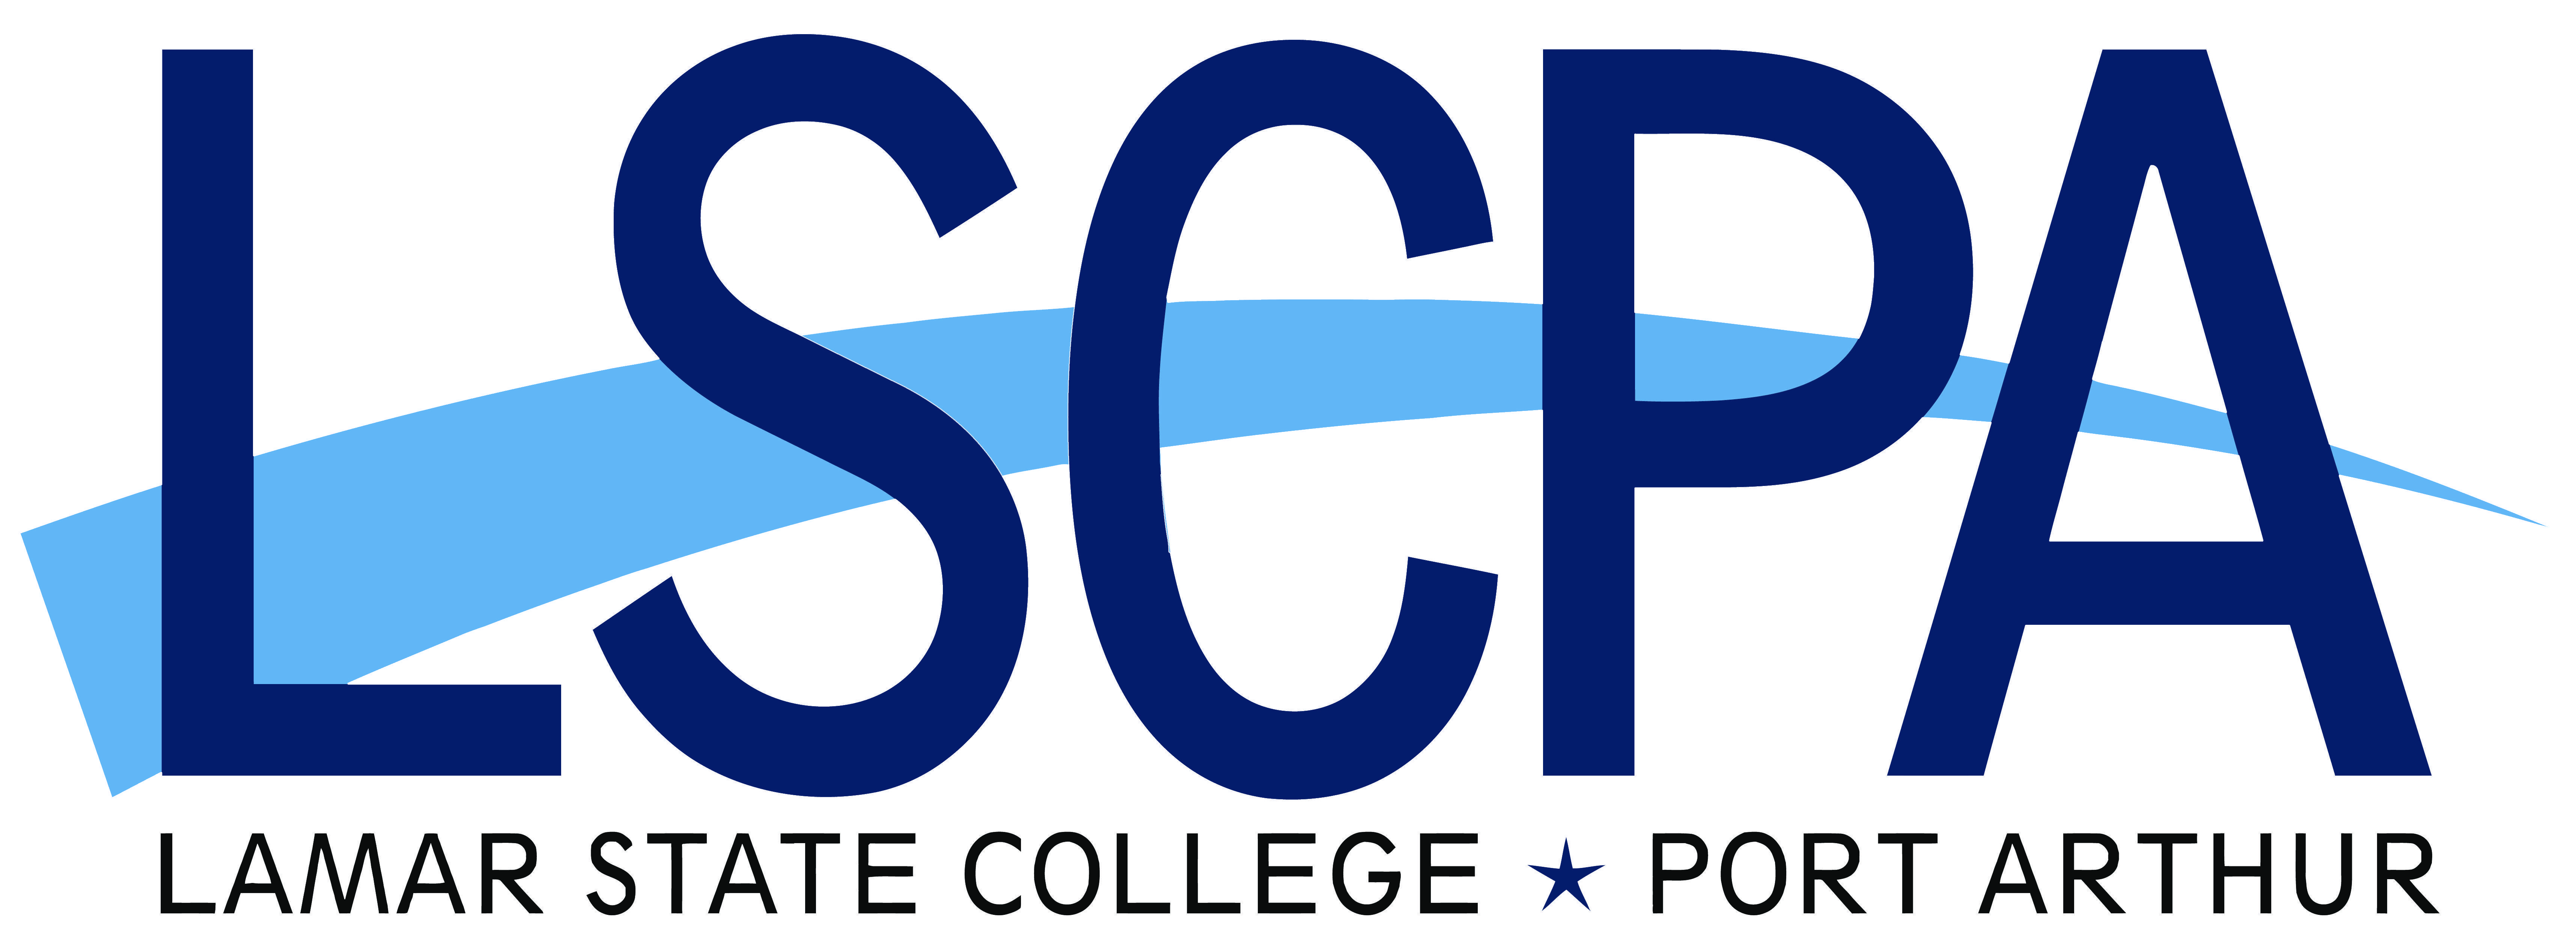 Arthur Logo - LSCPA Branding & Logos